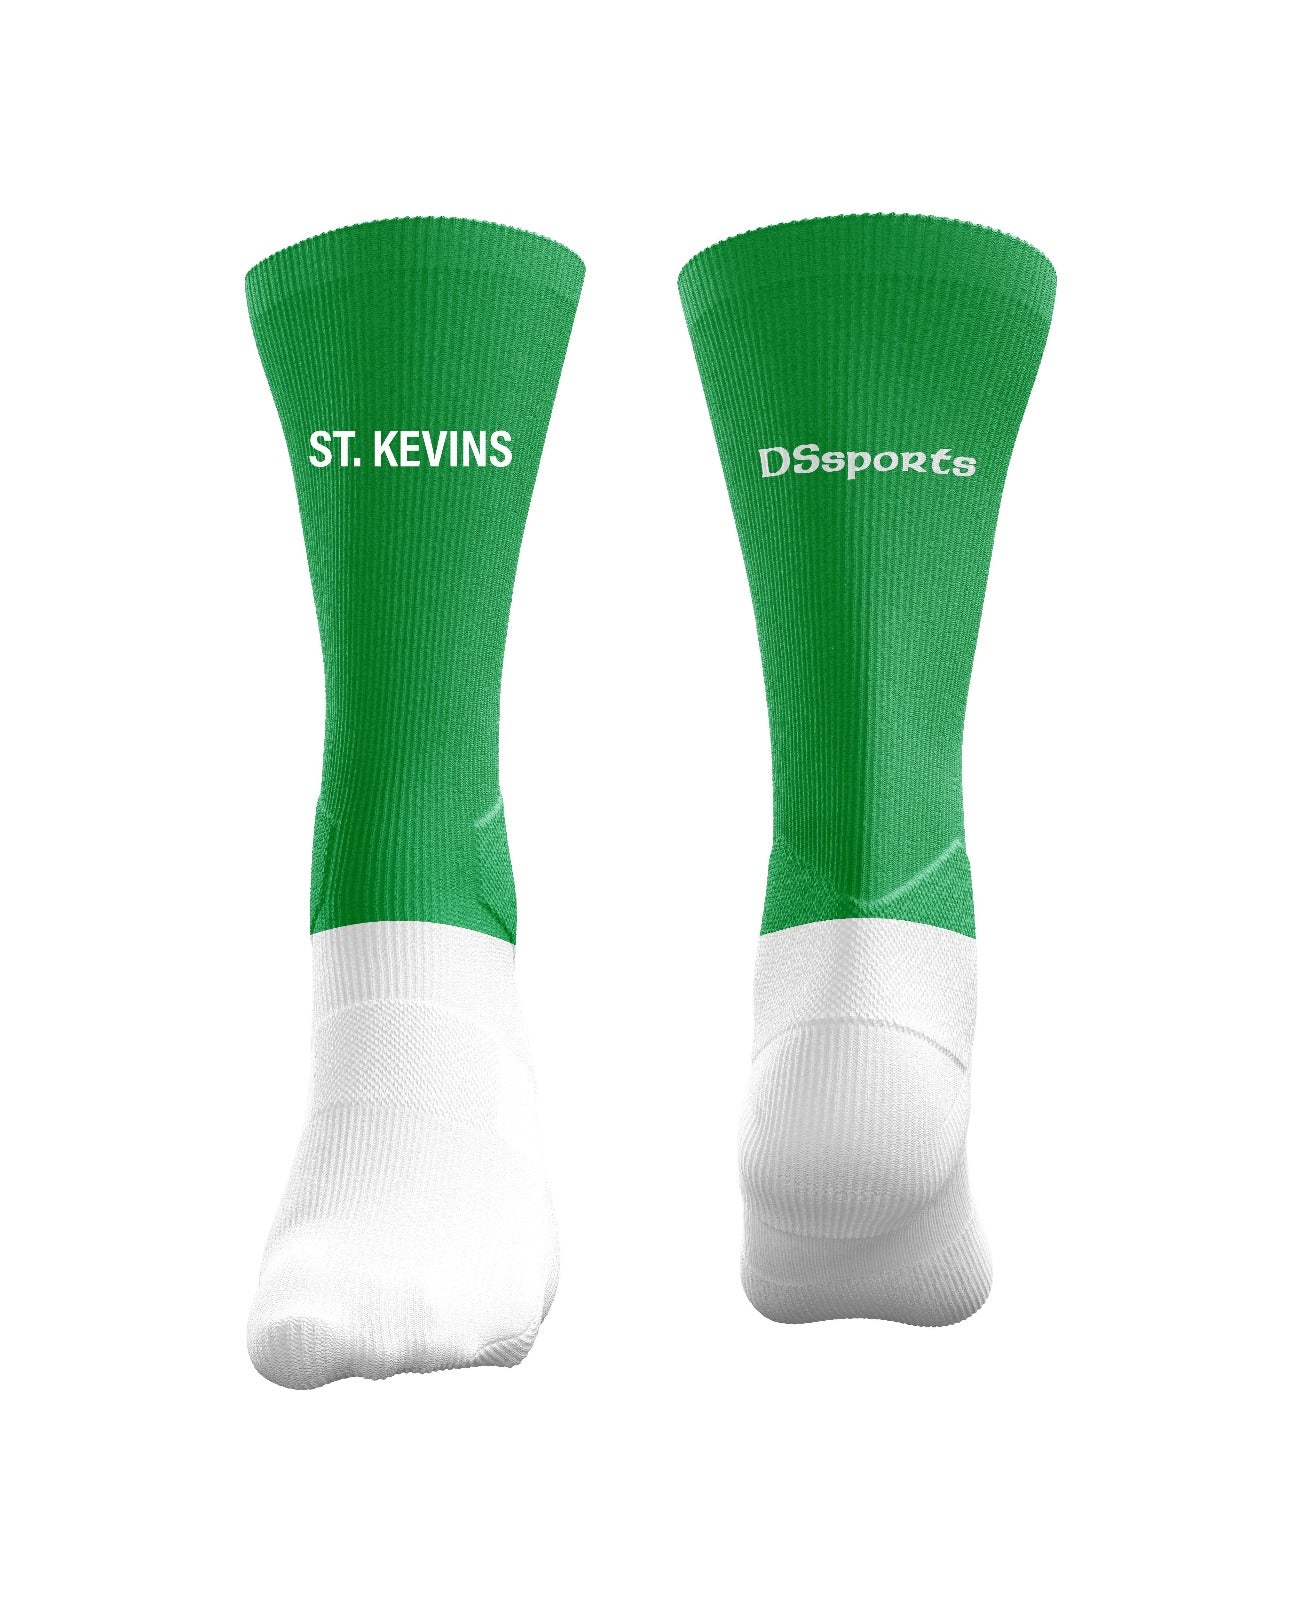 St Kevin's - Socks